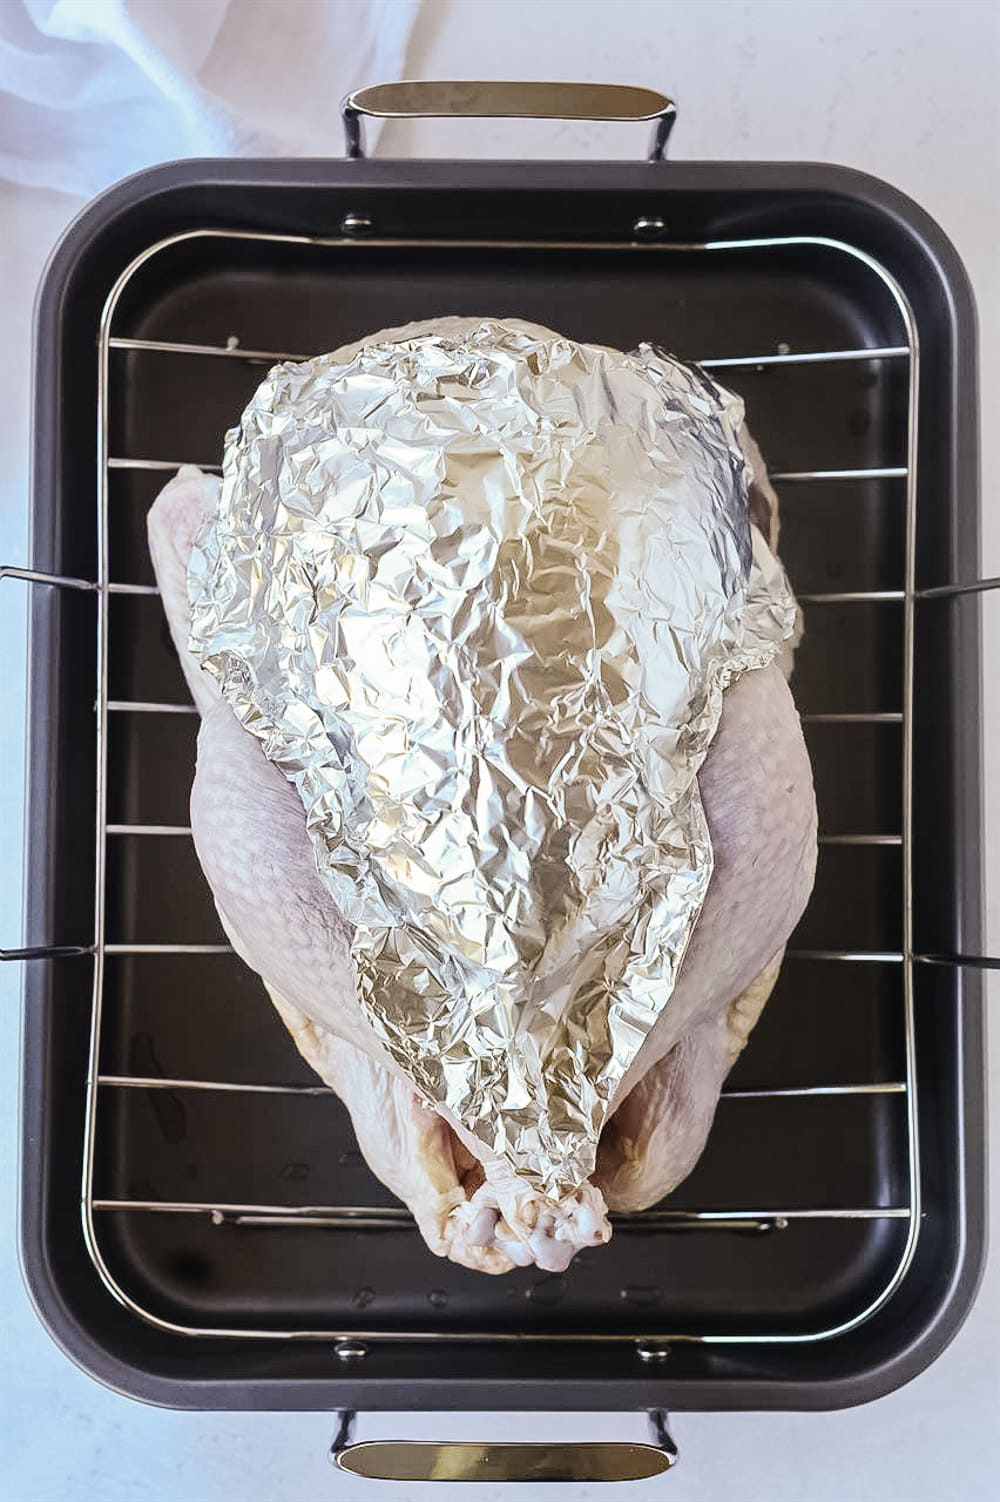 Foil over a turkey